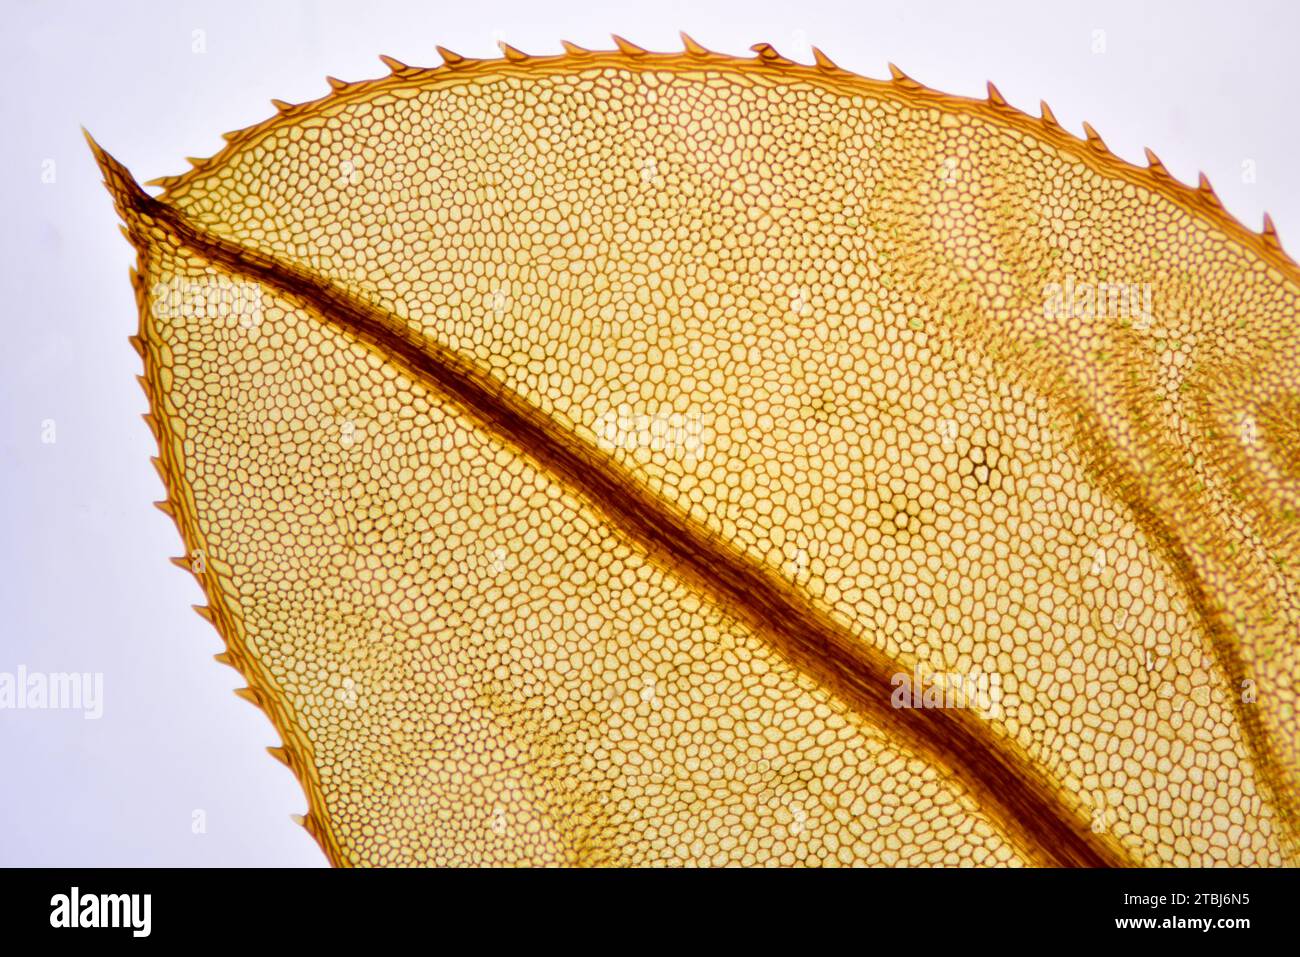 Selaginella leaf showing apex, cells, margin, teeth and vein. Optical microscope X40. Stock Photo